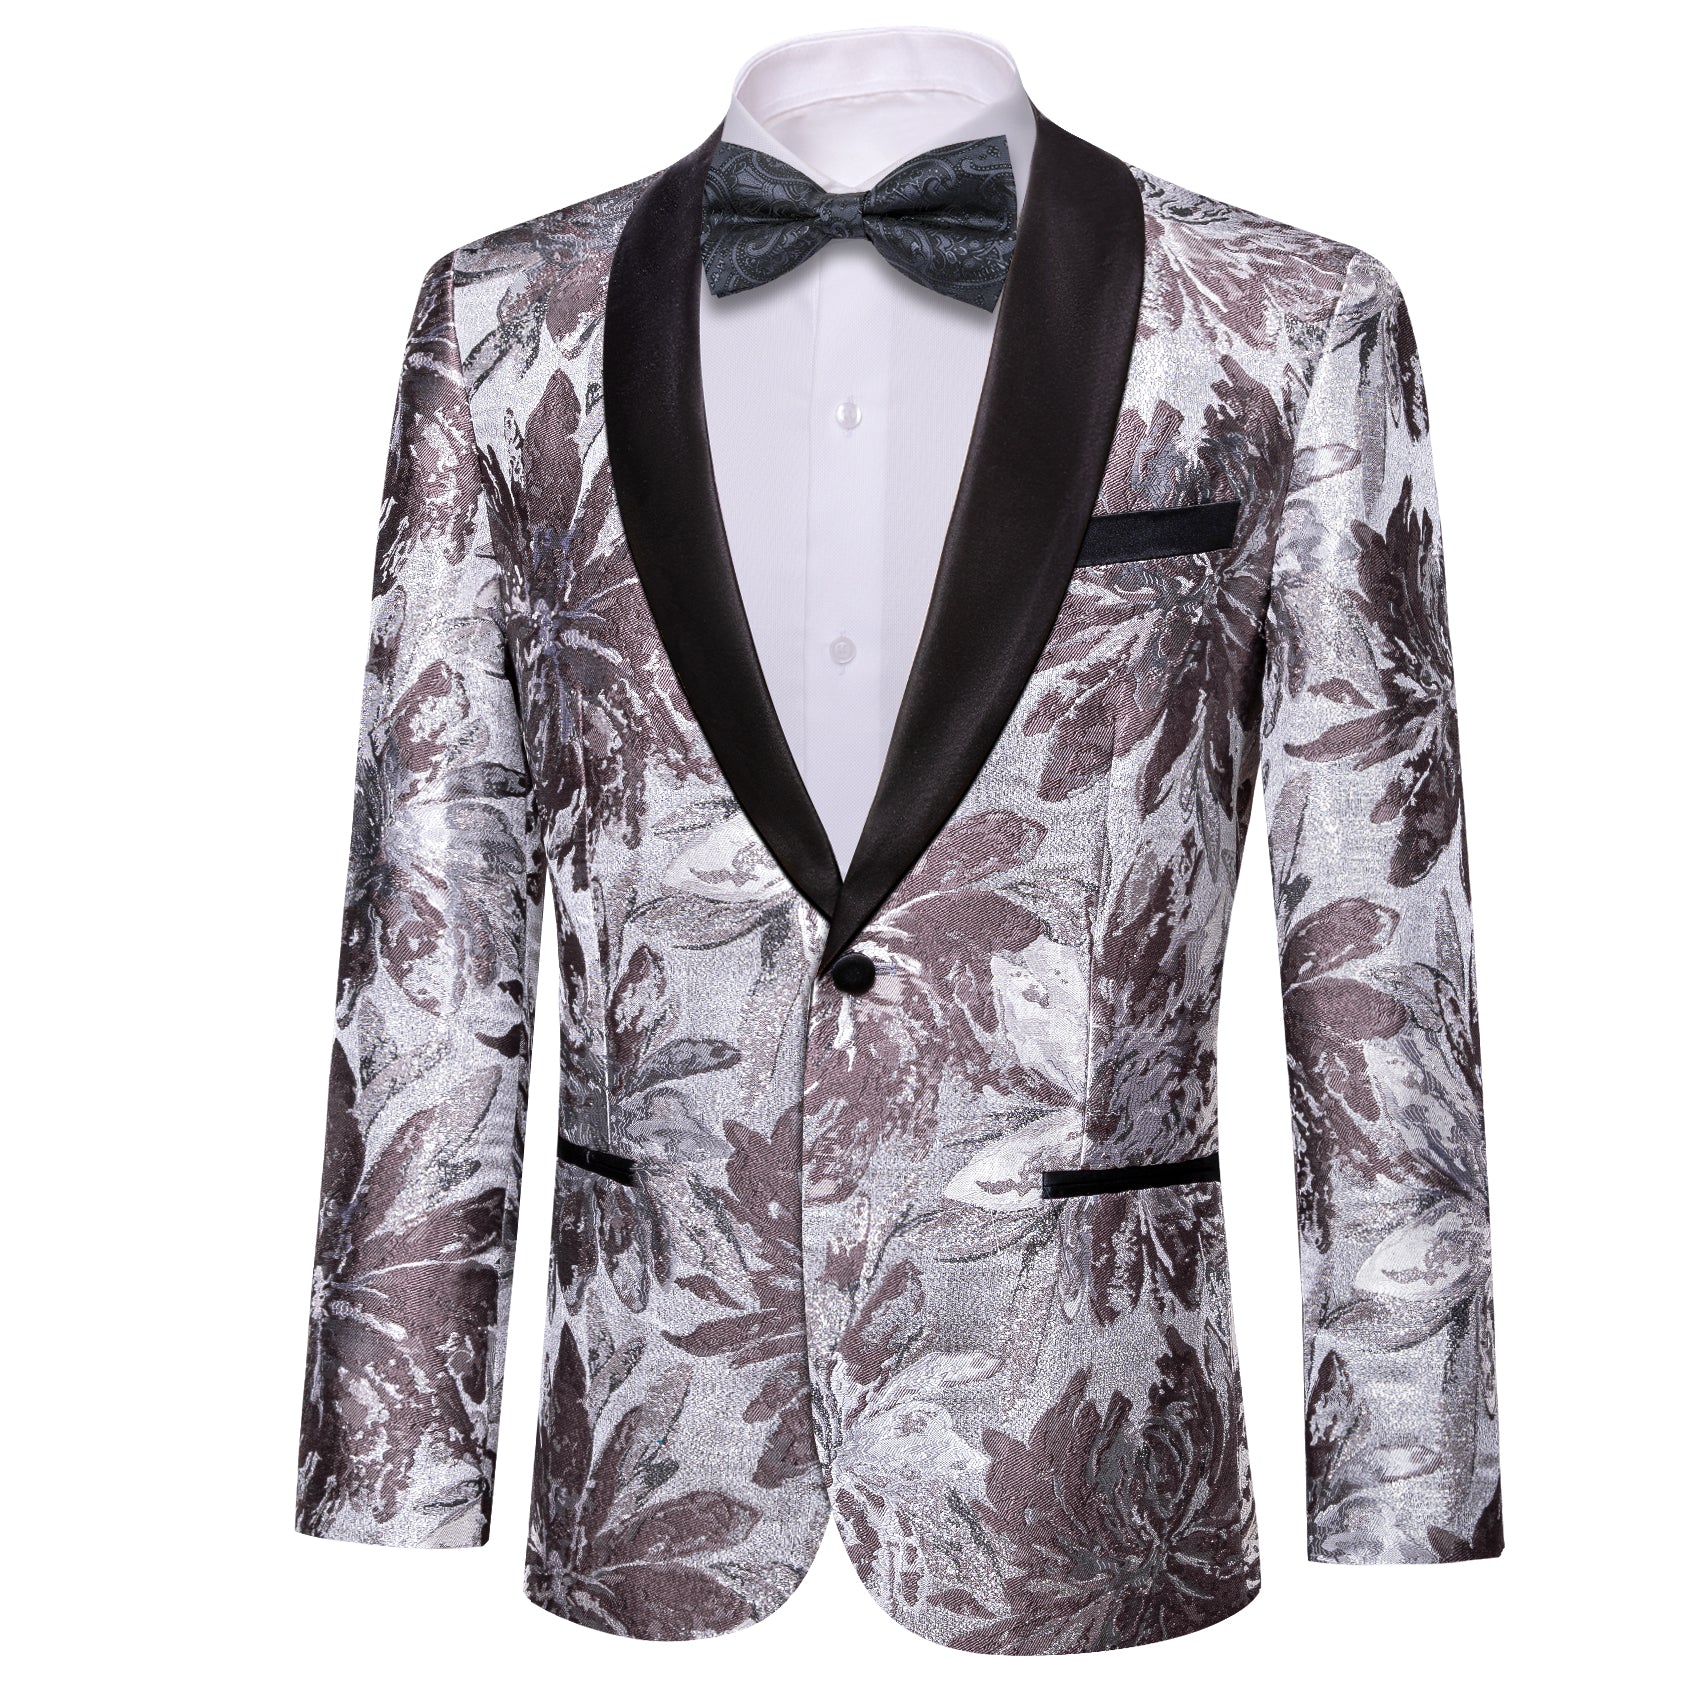 Men's Dress Party White Brown Floral Suit Jacket Slim One Button Stylish Blazer